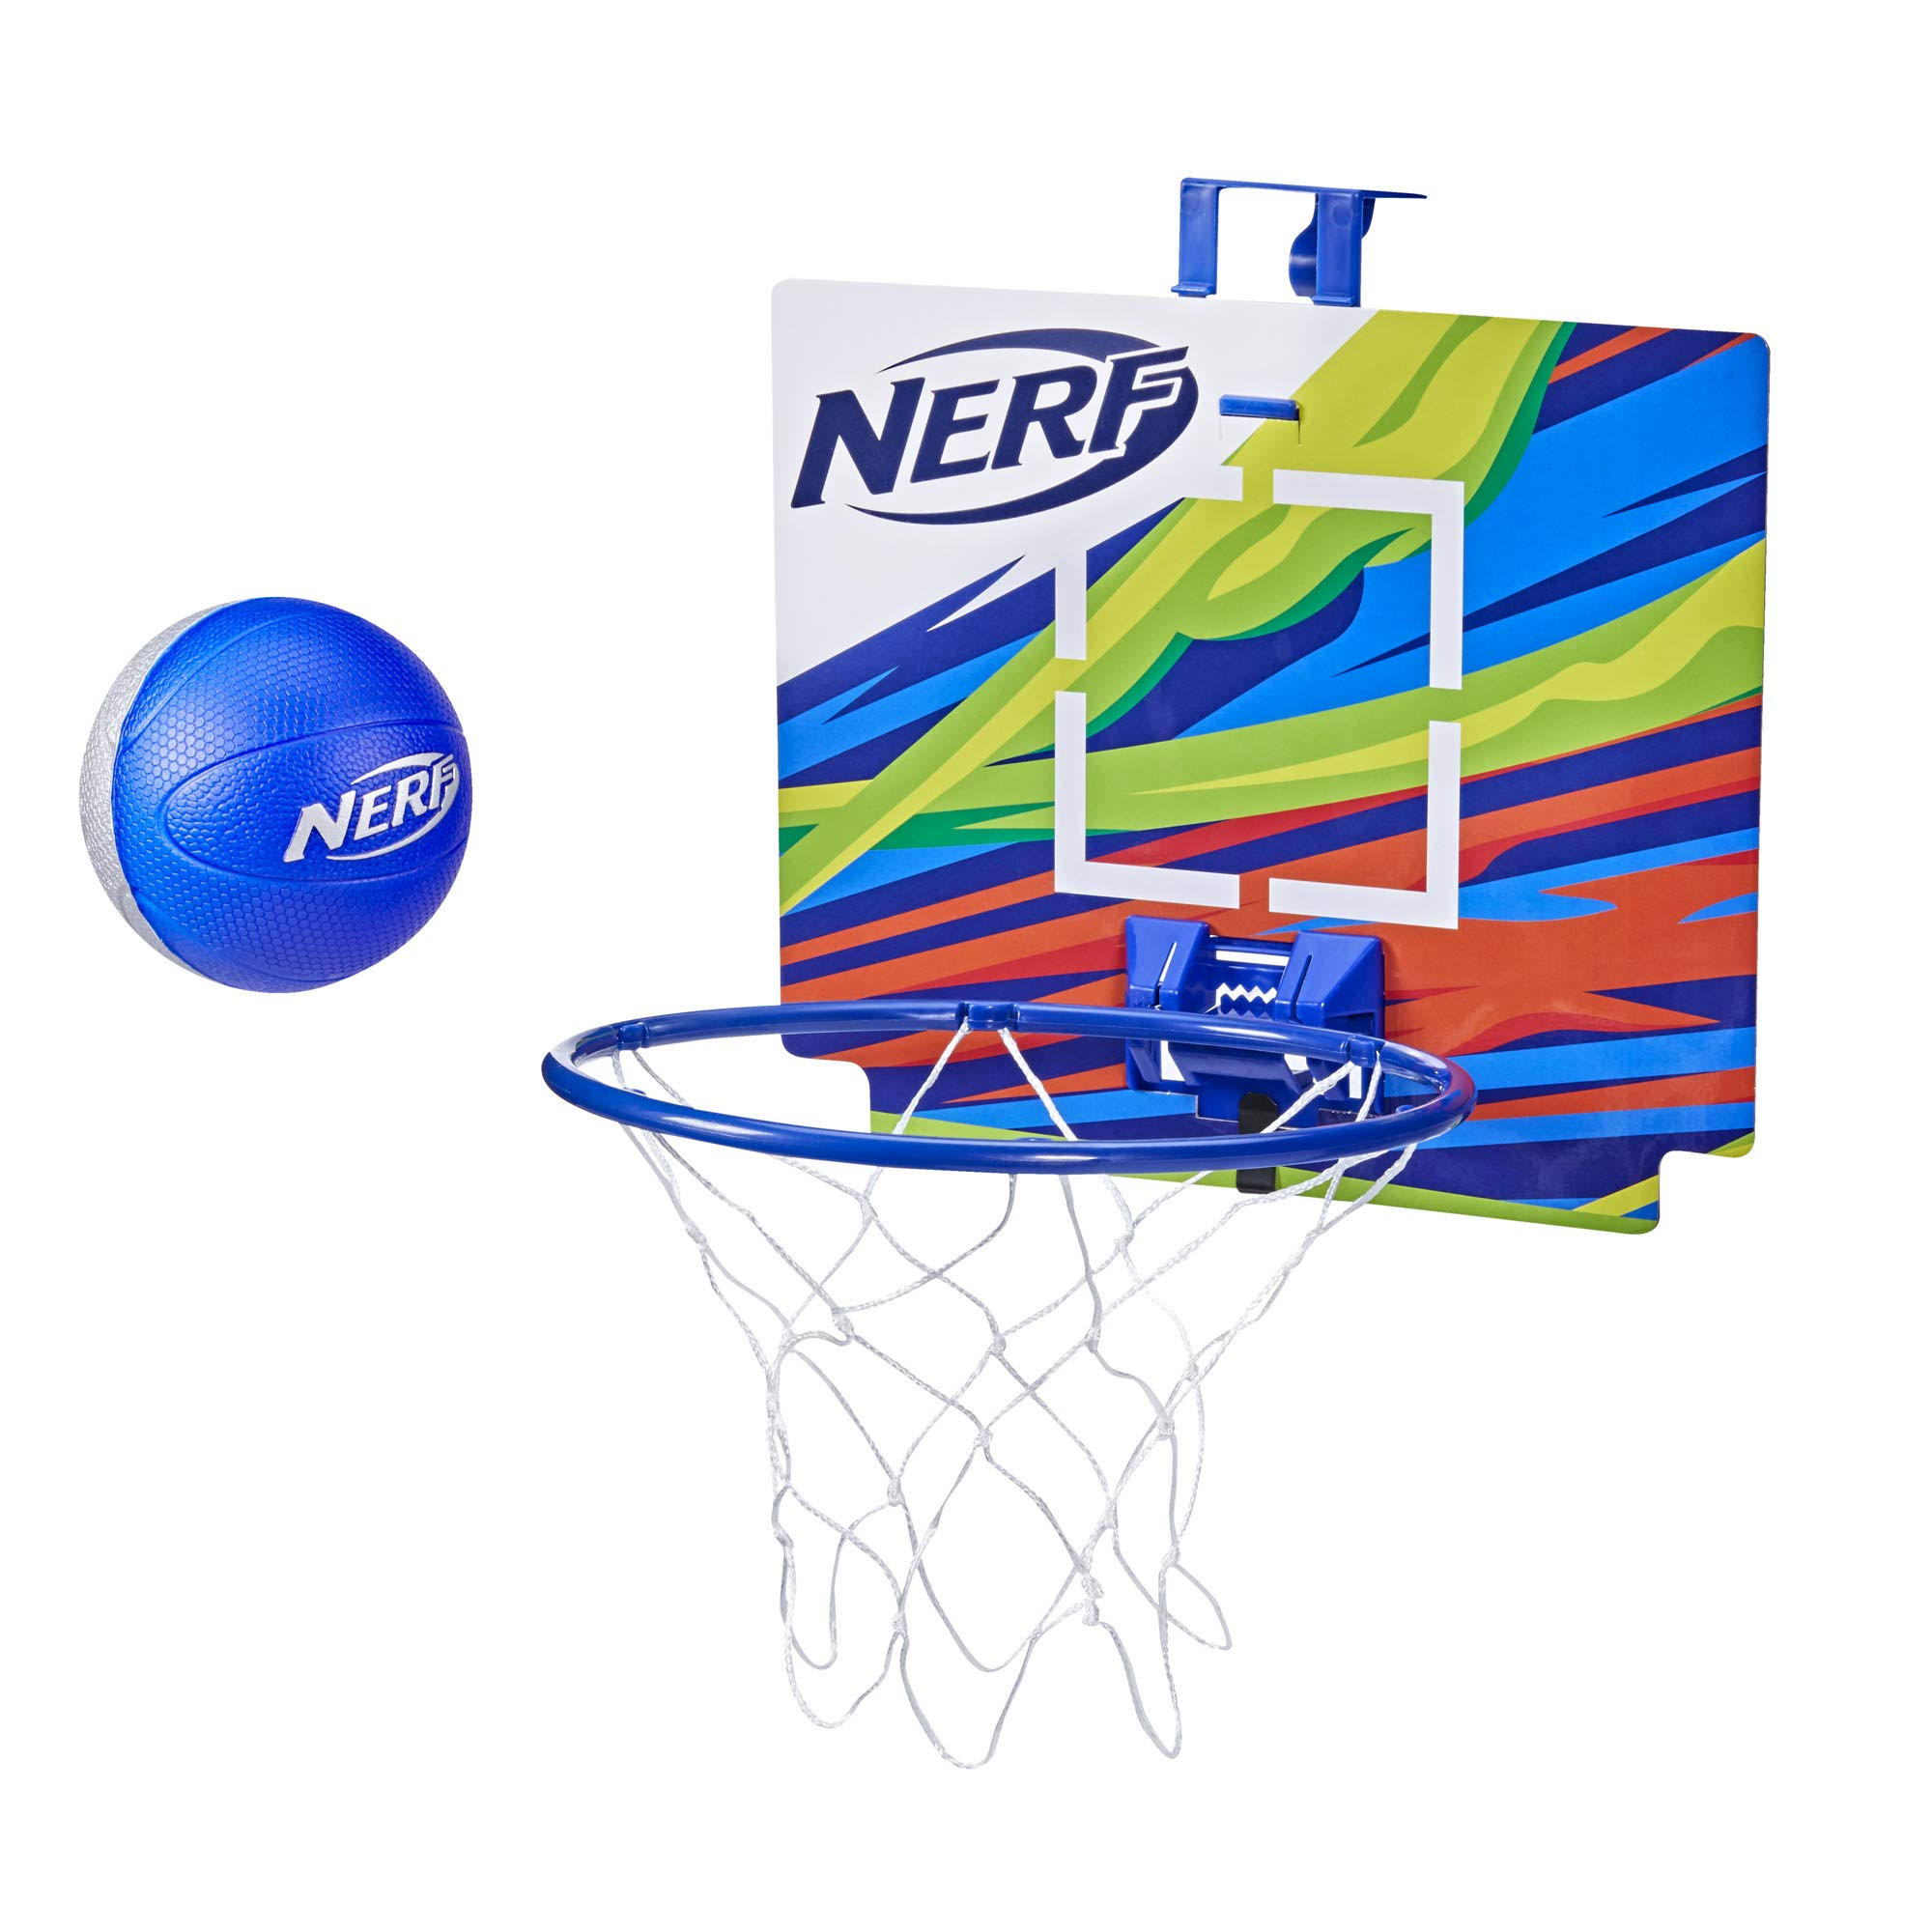 NERF Nerfoop - Classic Mini Foam Basketball & Hoop - Hooks On Doors - Indoor and Outdoor Play